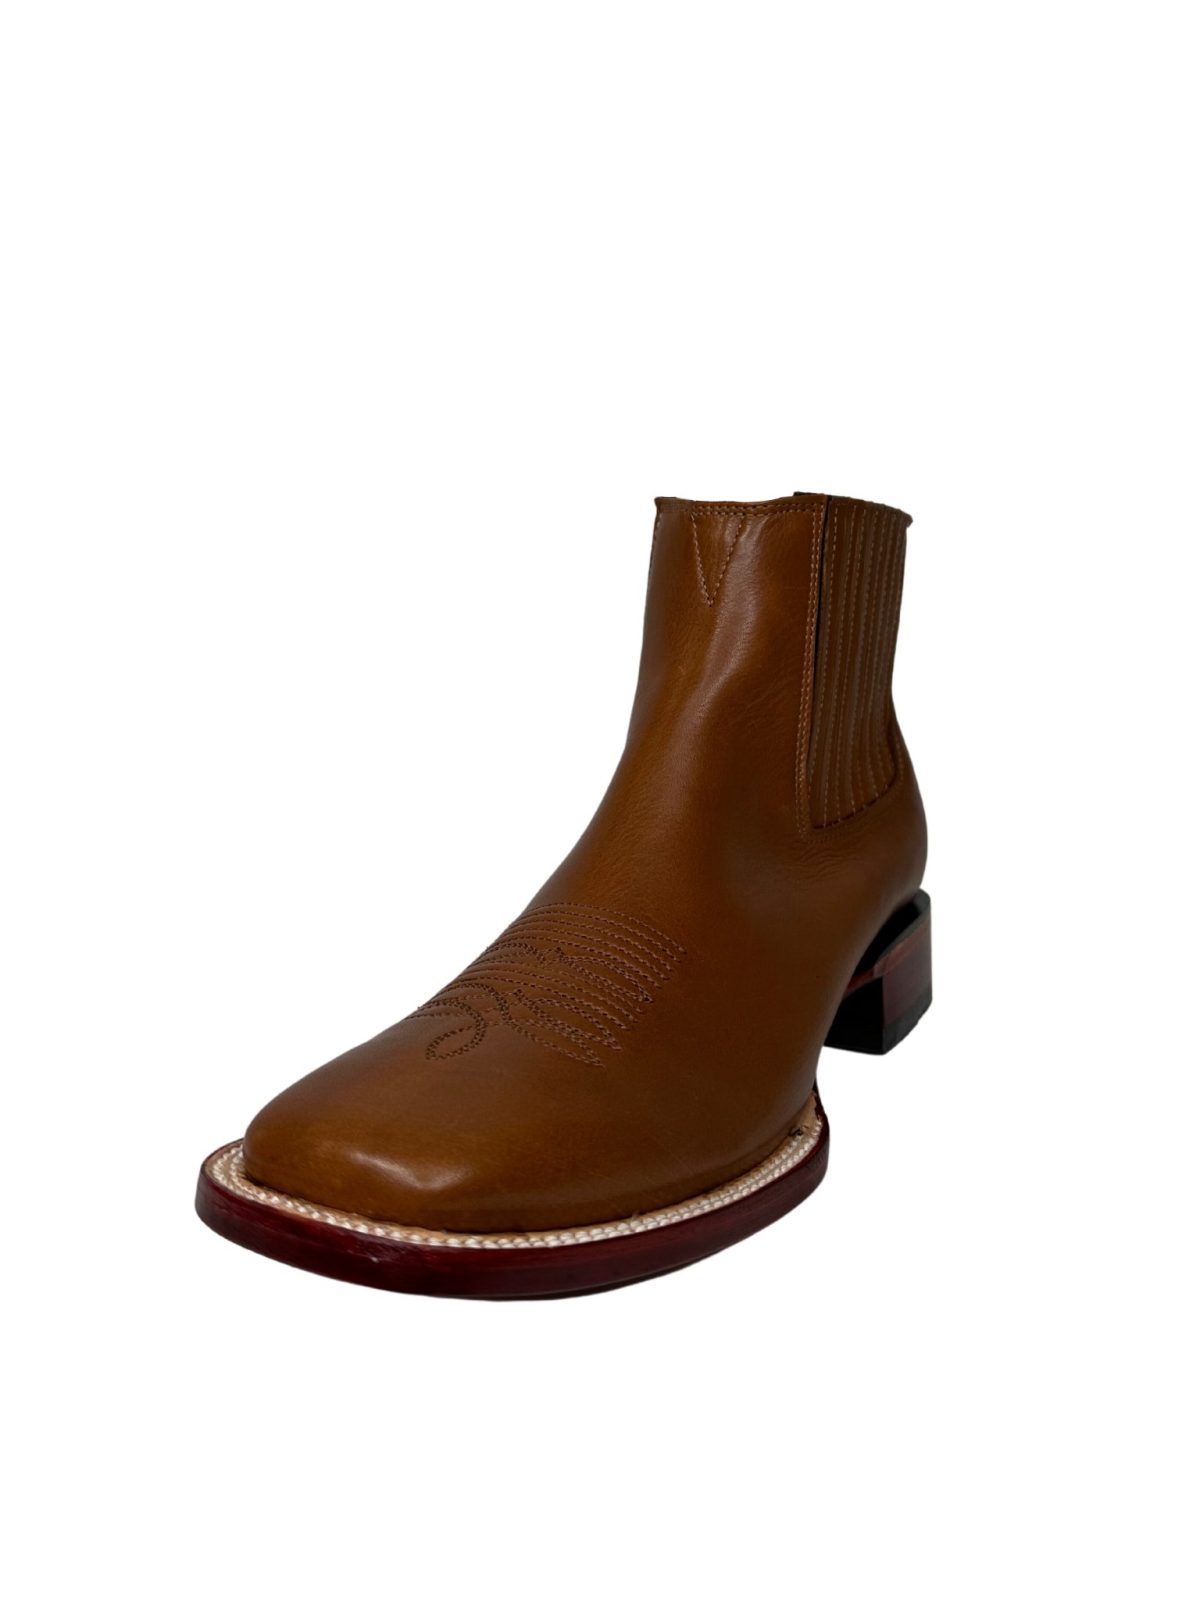 Wild West Men’s Sqaure Toe Honey Belmont Leather Short Boot